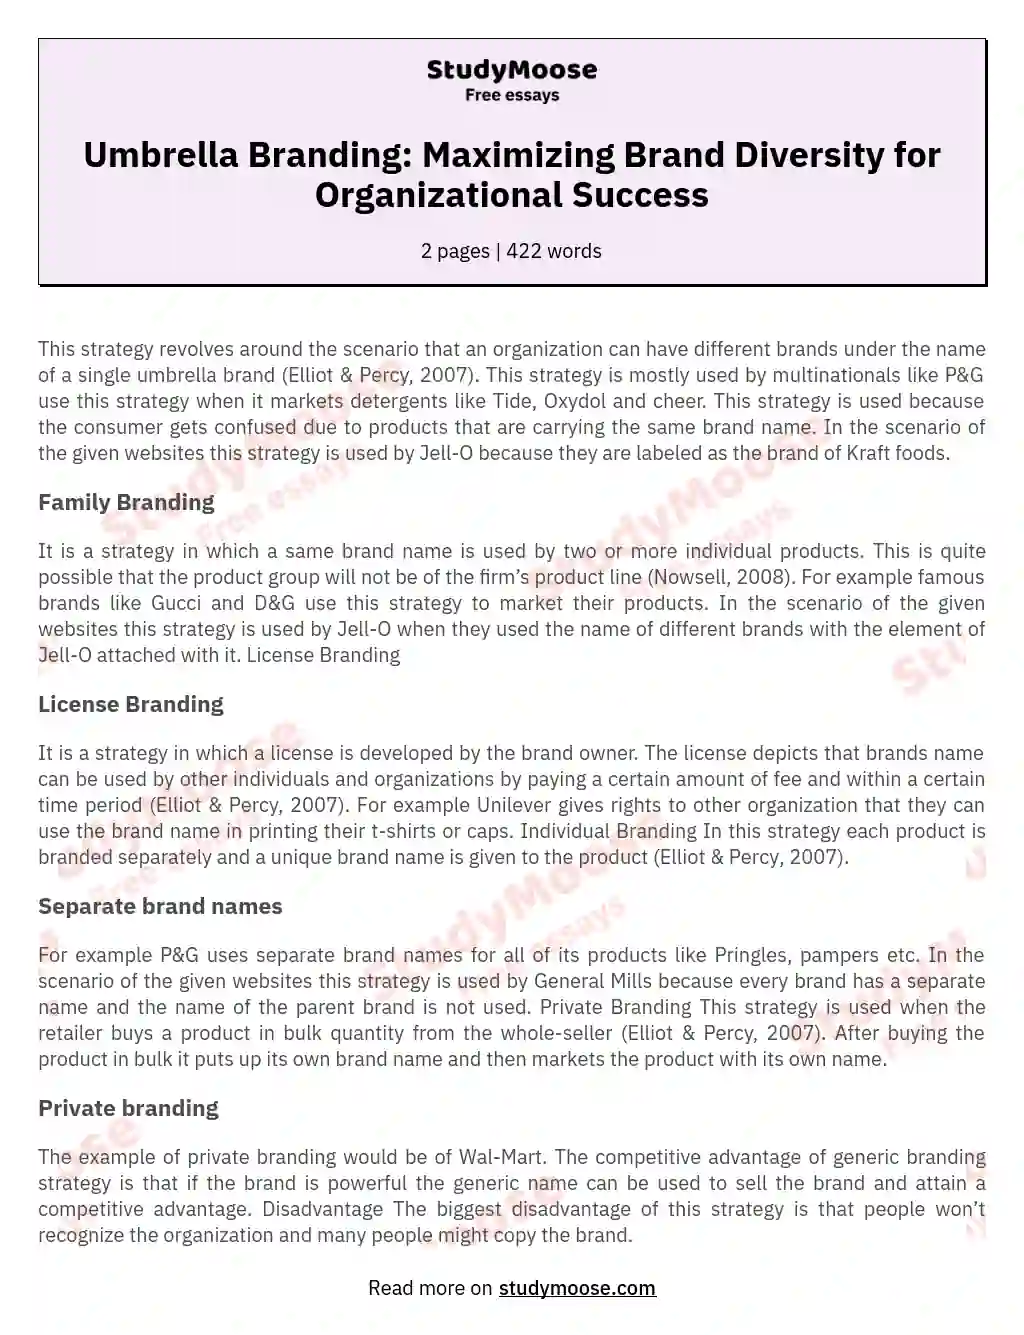 Umbrella Branding: Maximizing Brand Diversity for Organizational Success essay